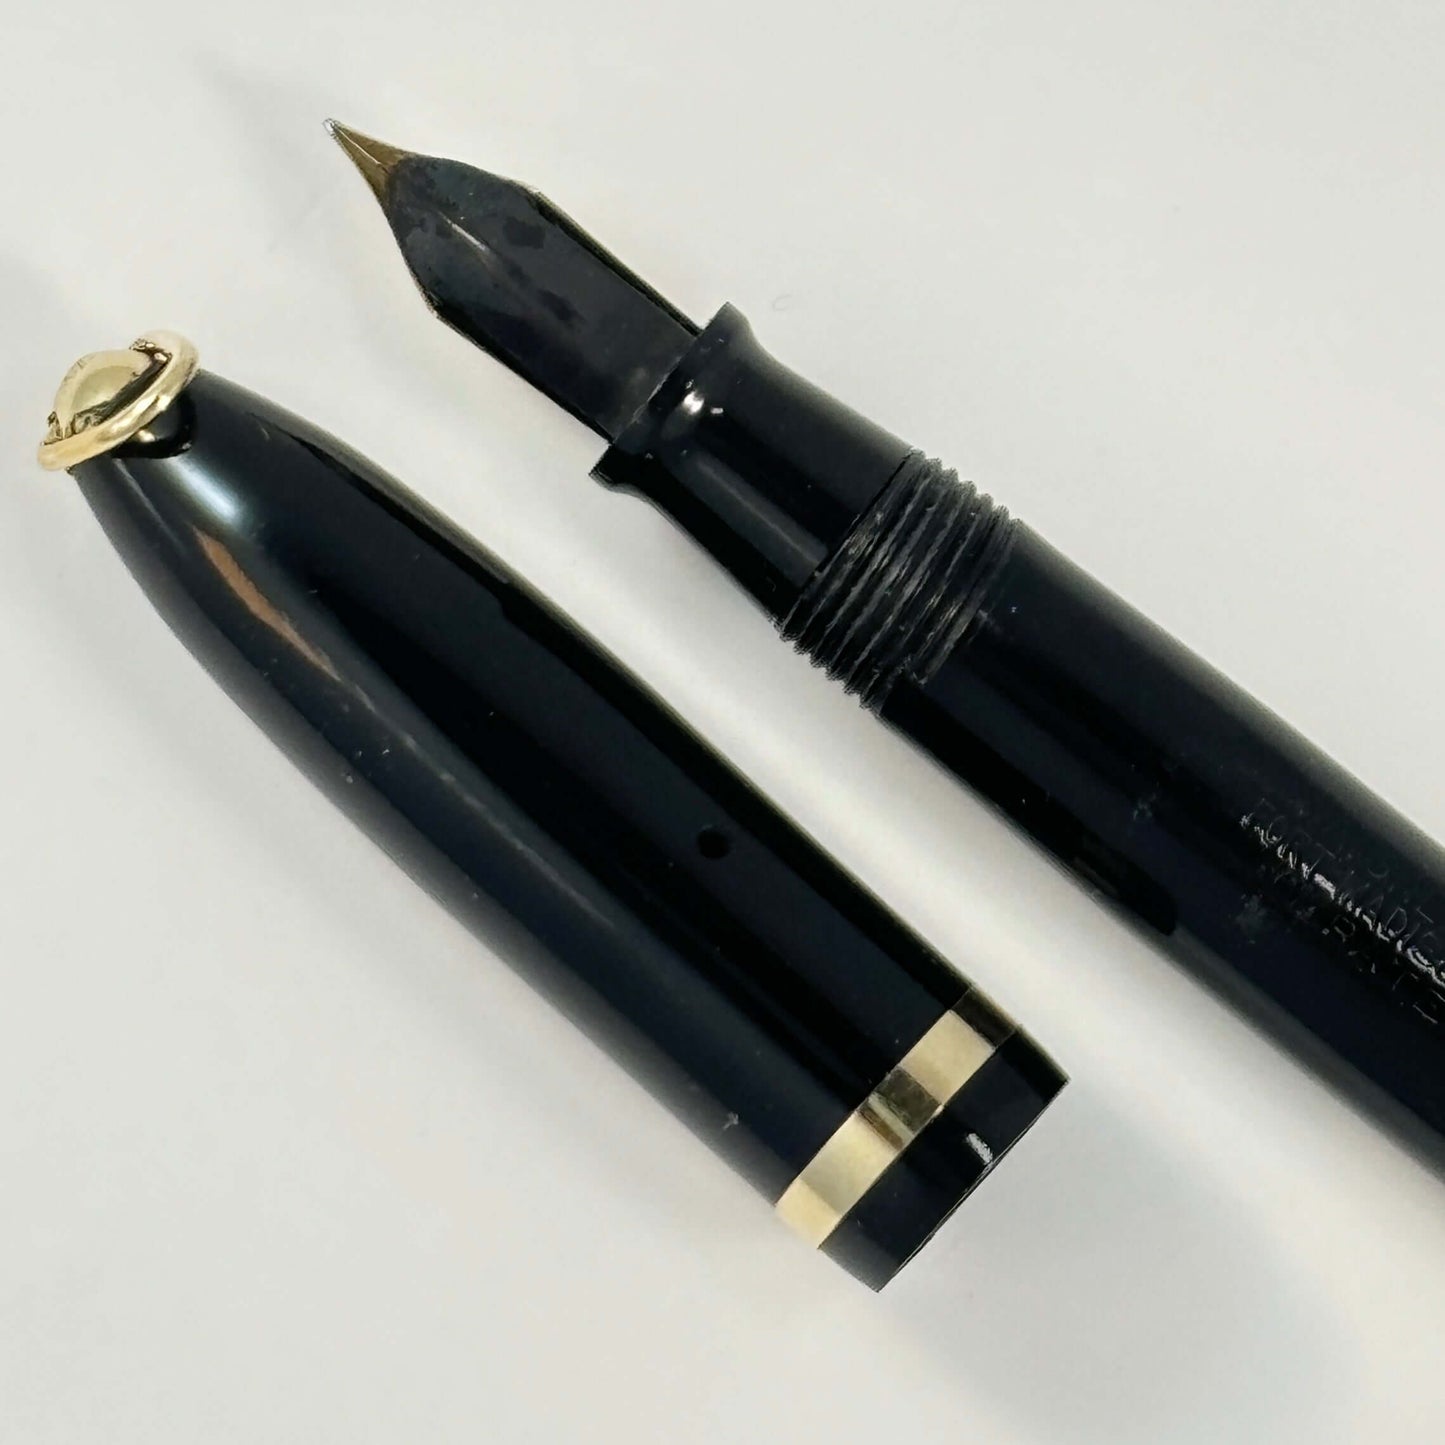 Sheaffer Petit Balance Ring Top Fountian Pen, Restored Lever-filler, 14K Medium Nib.